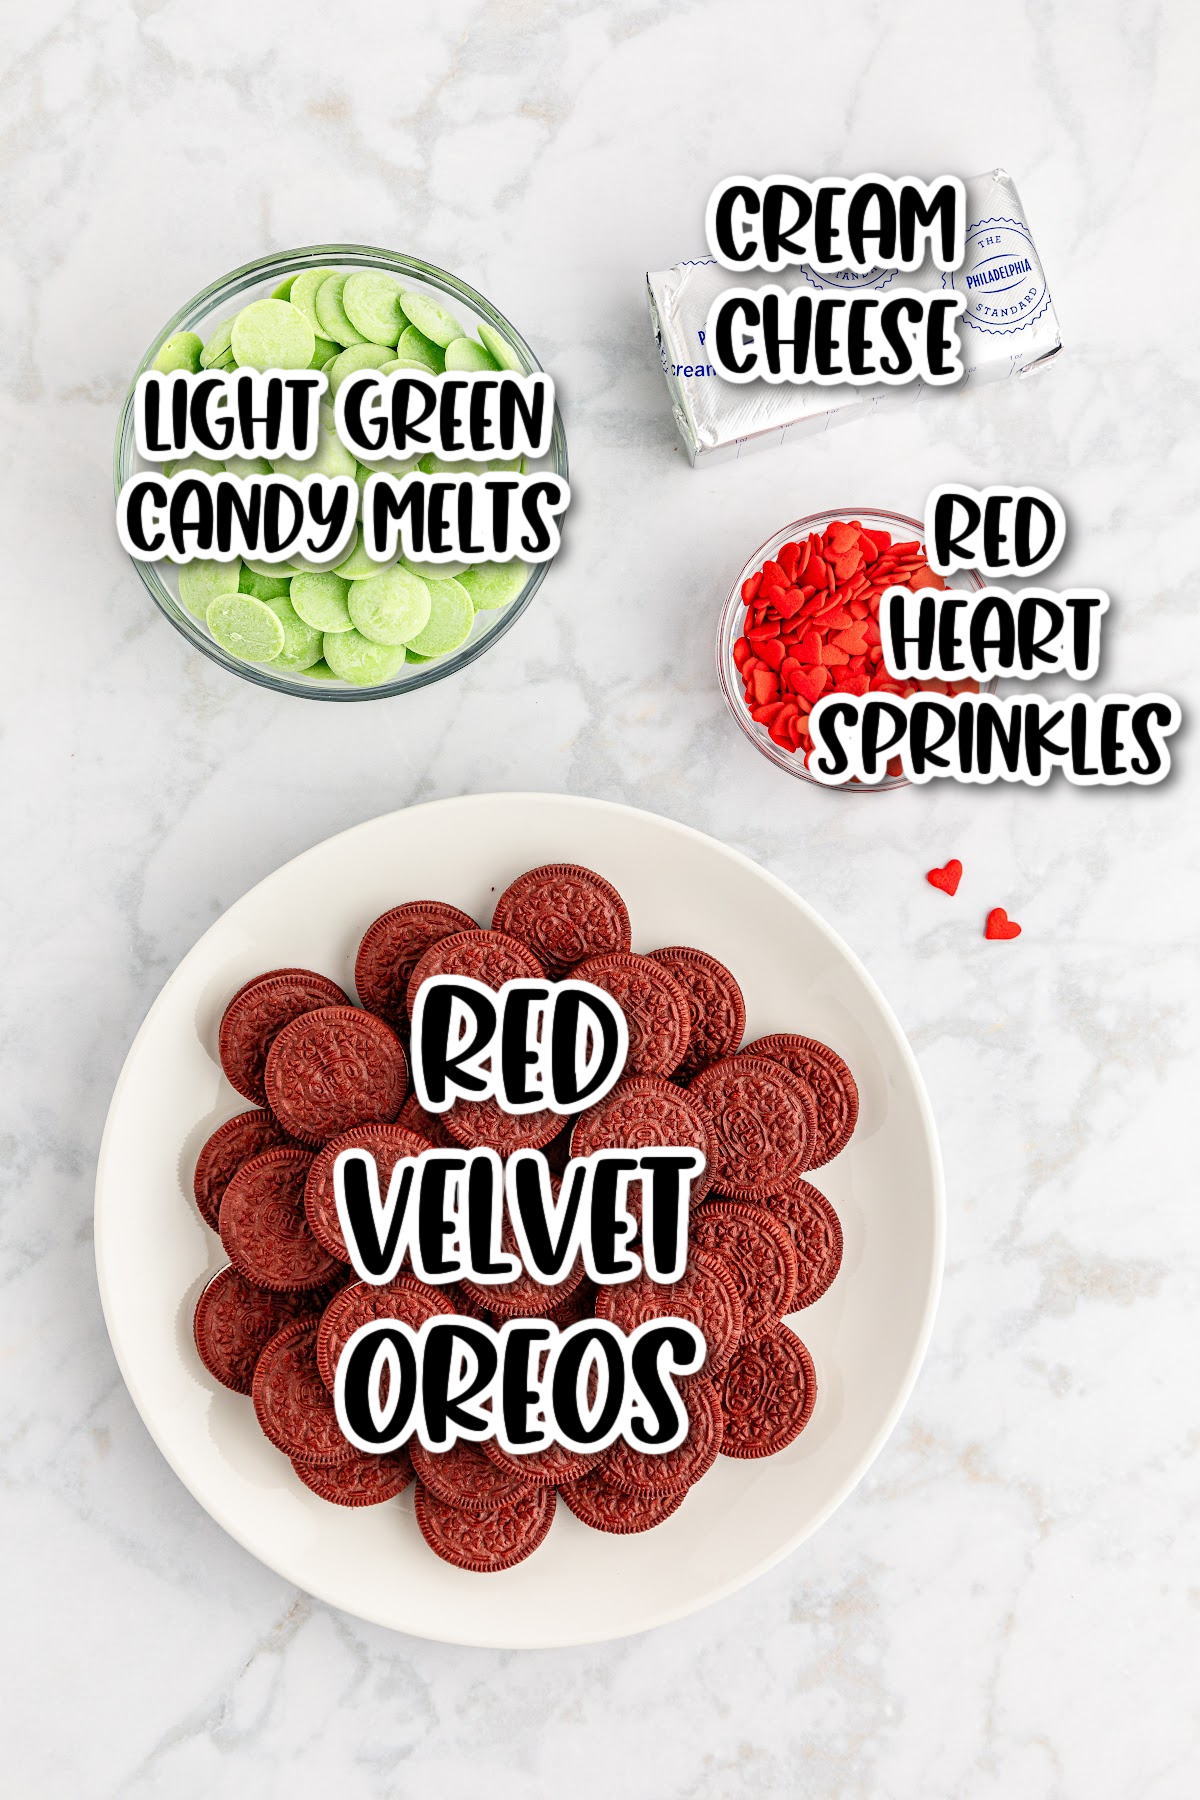 The ingredients for red velvet oreos.